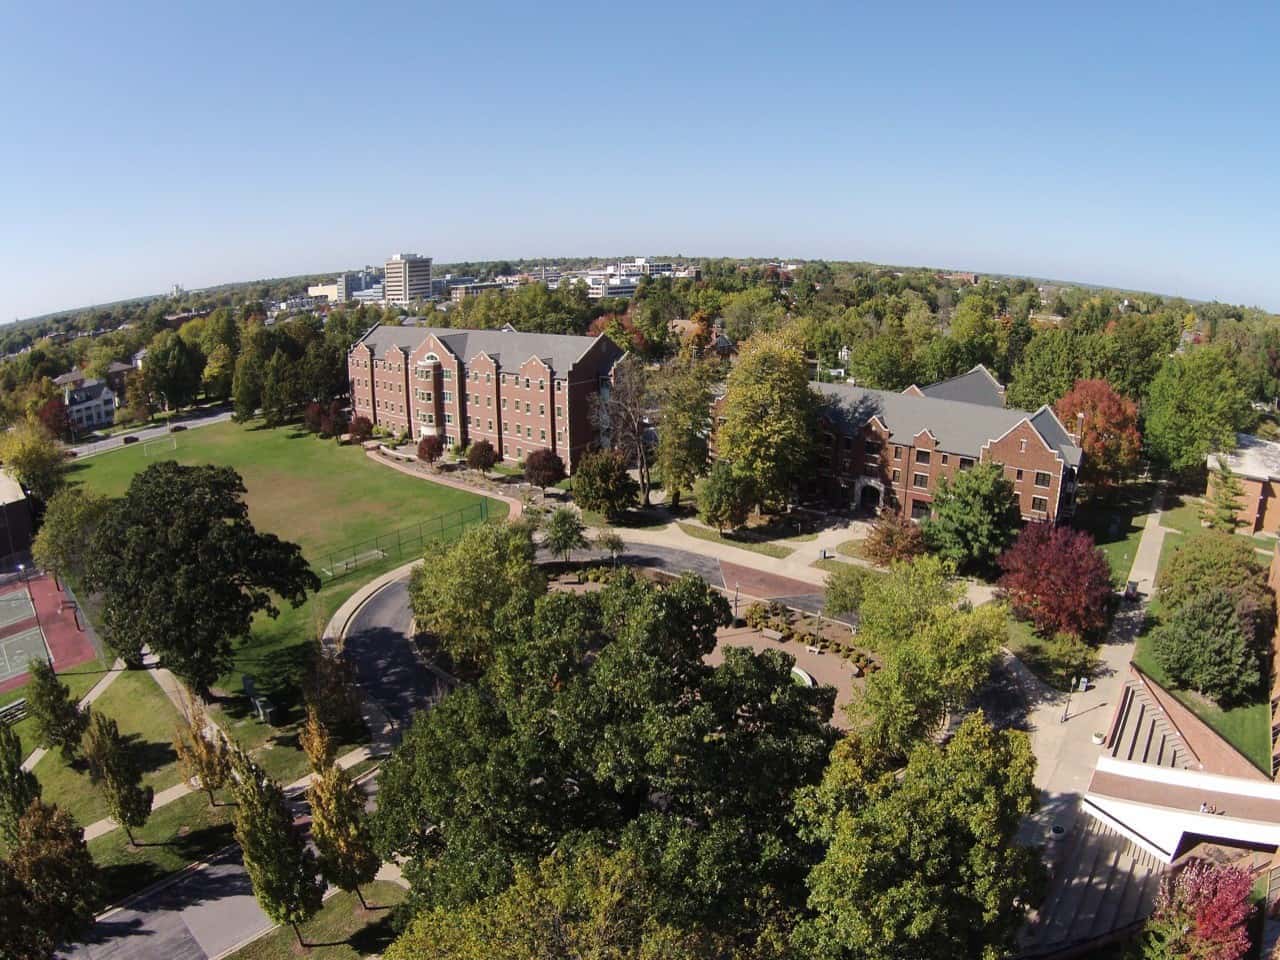 Drury University Is A Top 20 Midwest School In Latest U.S. News